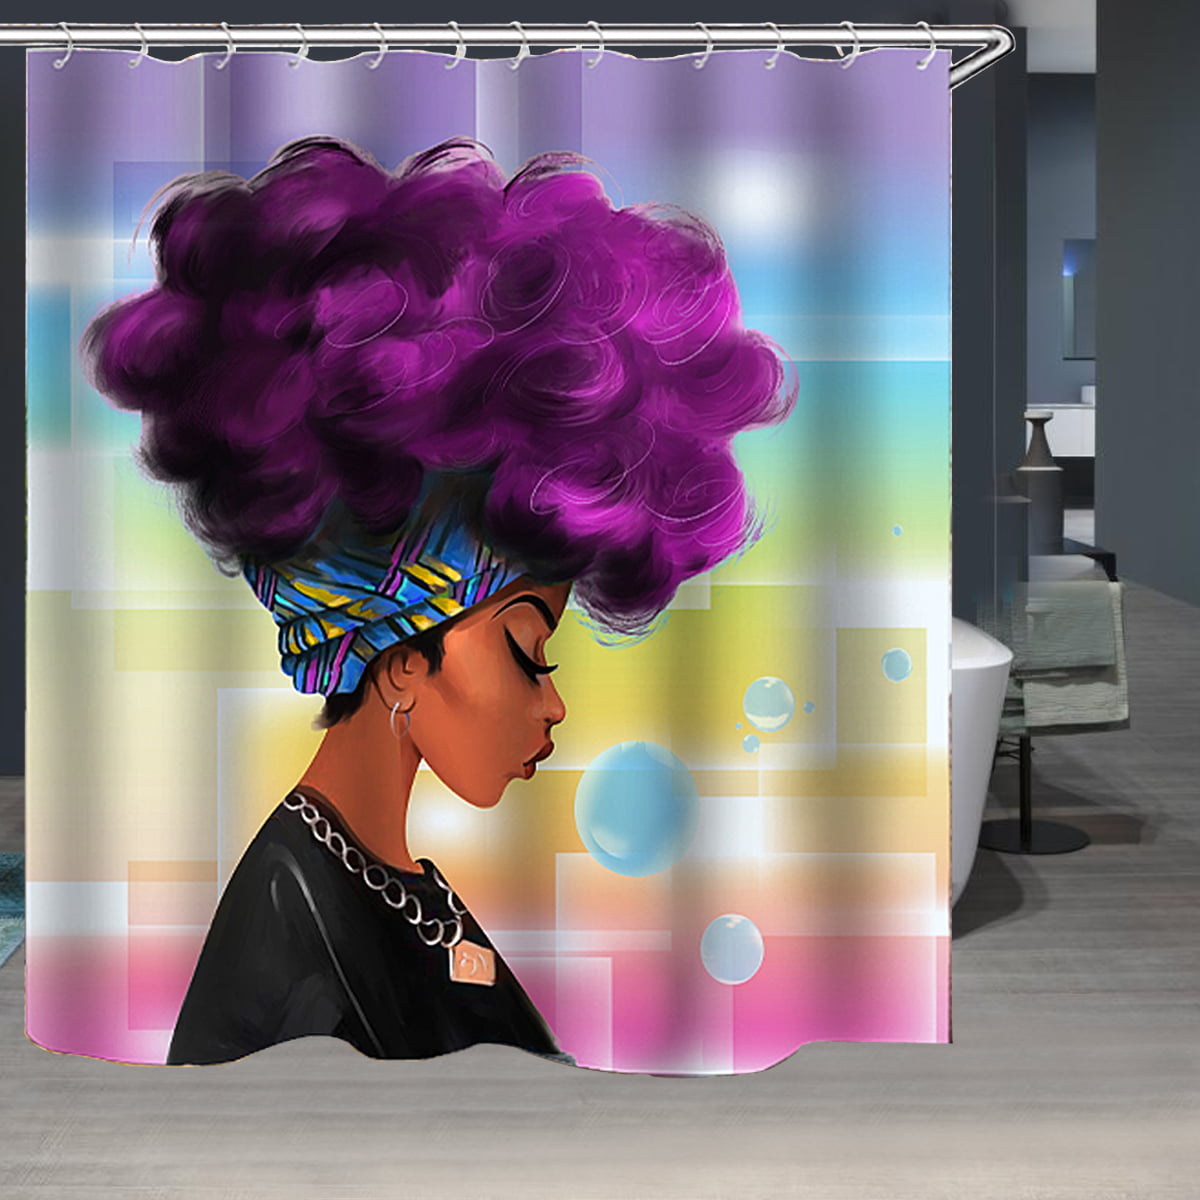 African Woman Purple Hair Shower Curtain Bathroom Waterproof Fabric & 12 Hooks 